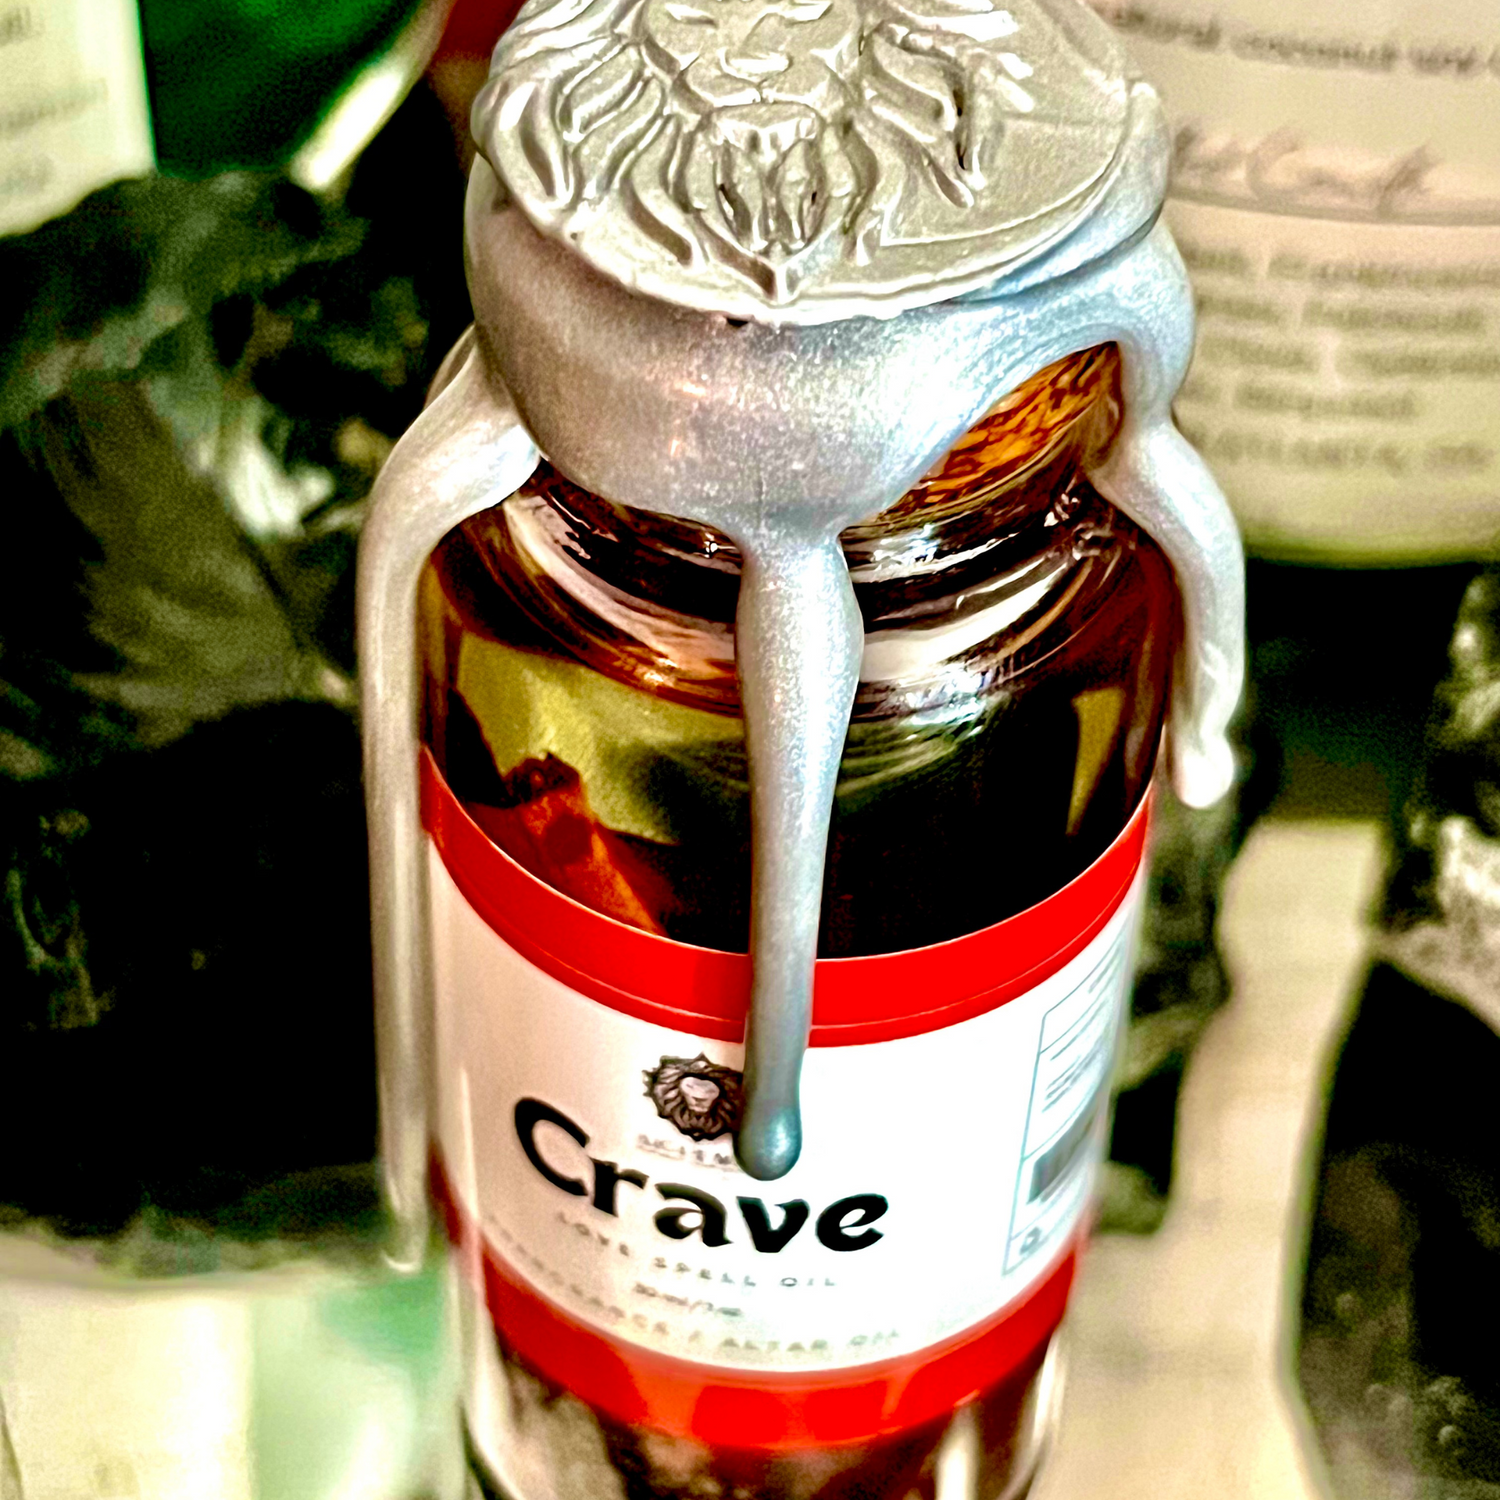 Crave - Love Spelled Oil